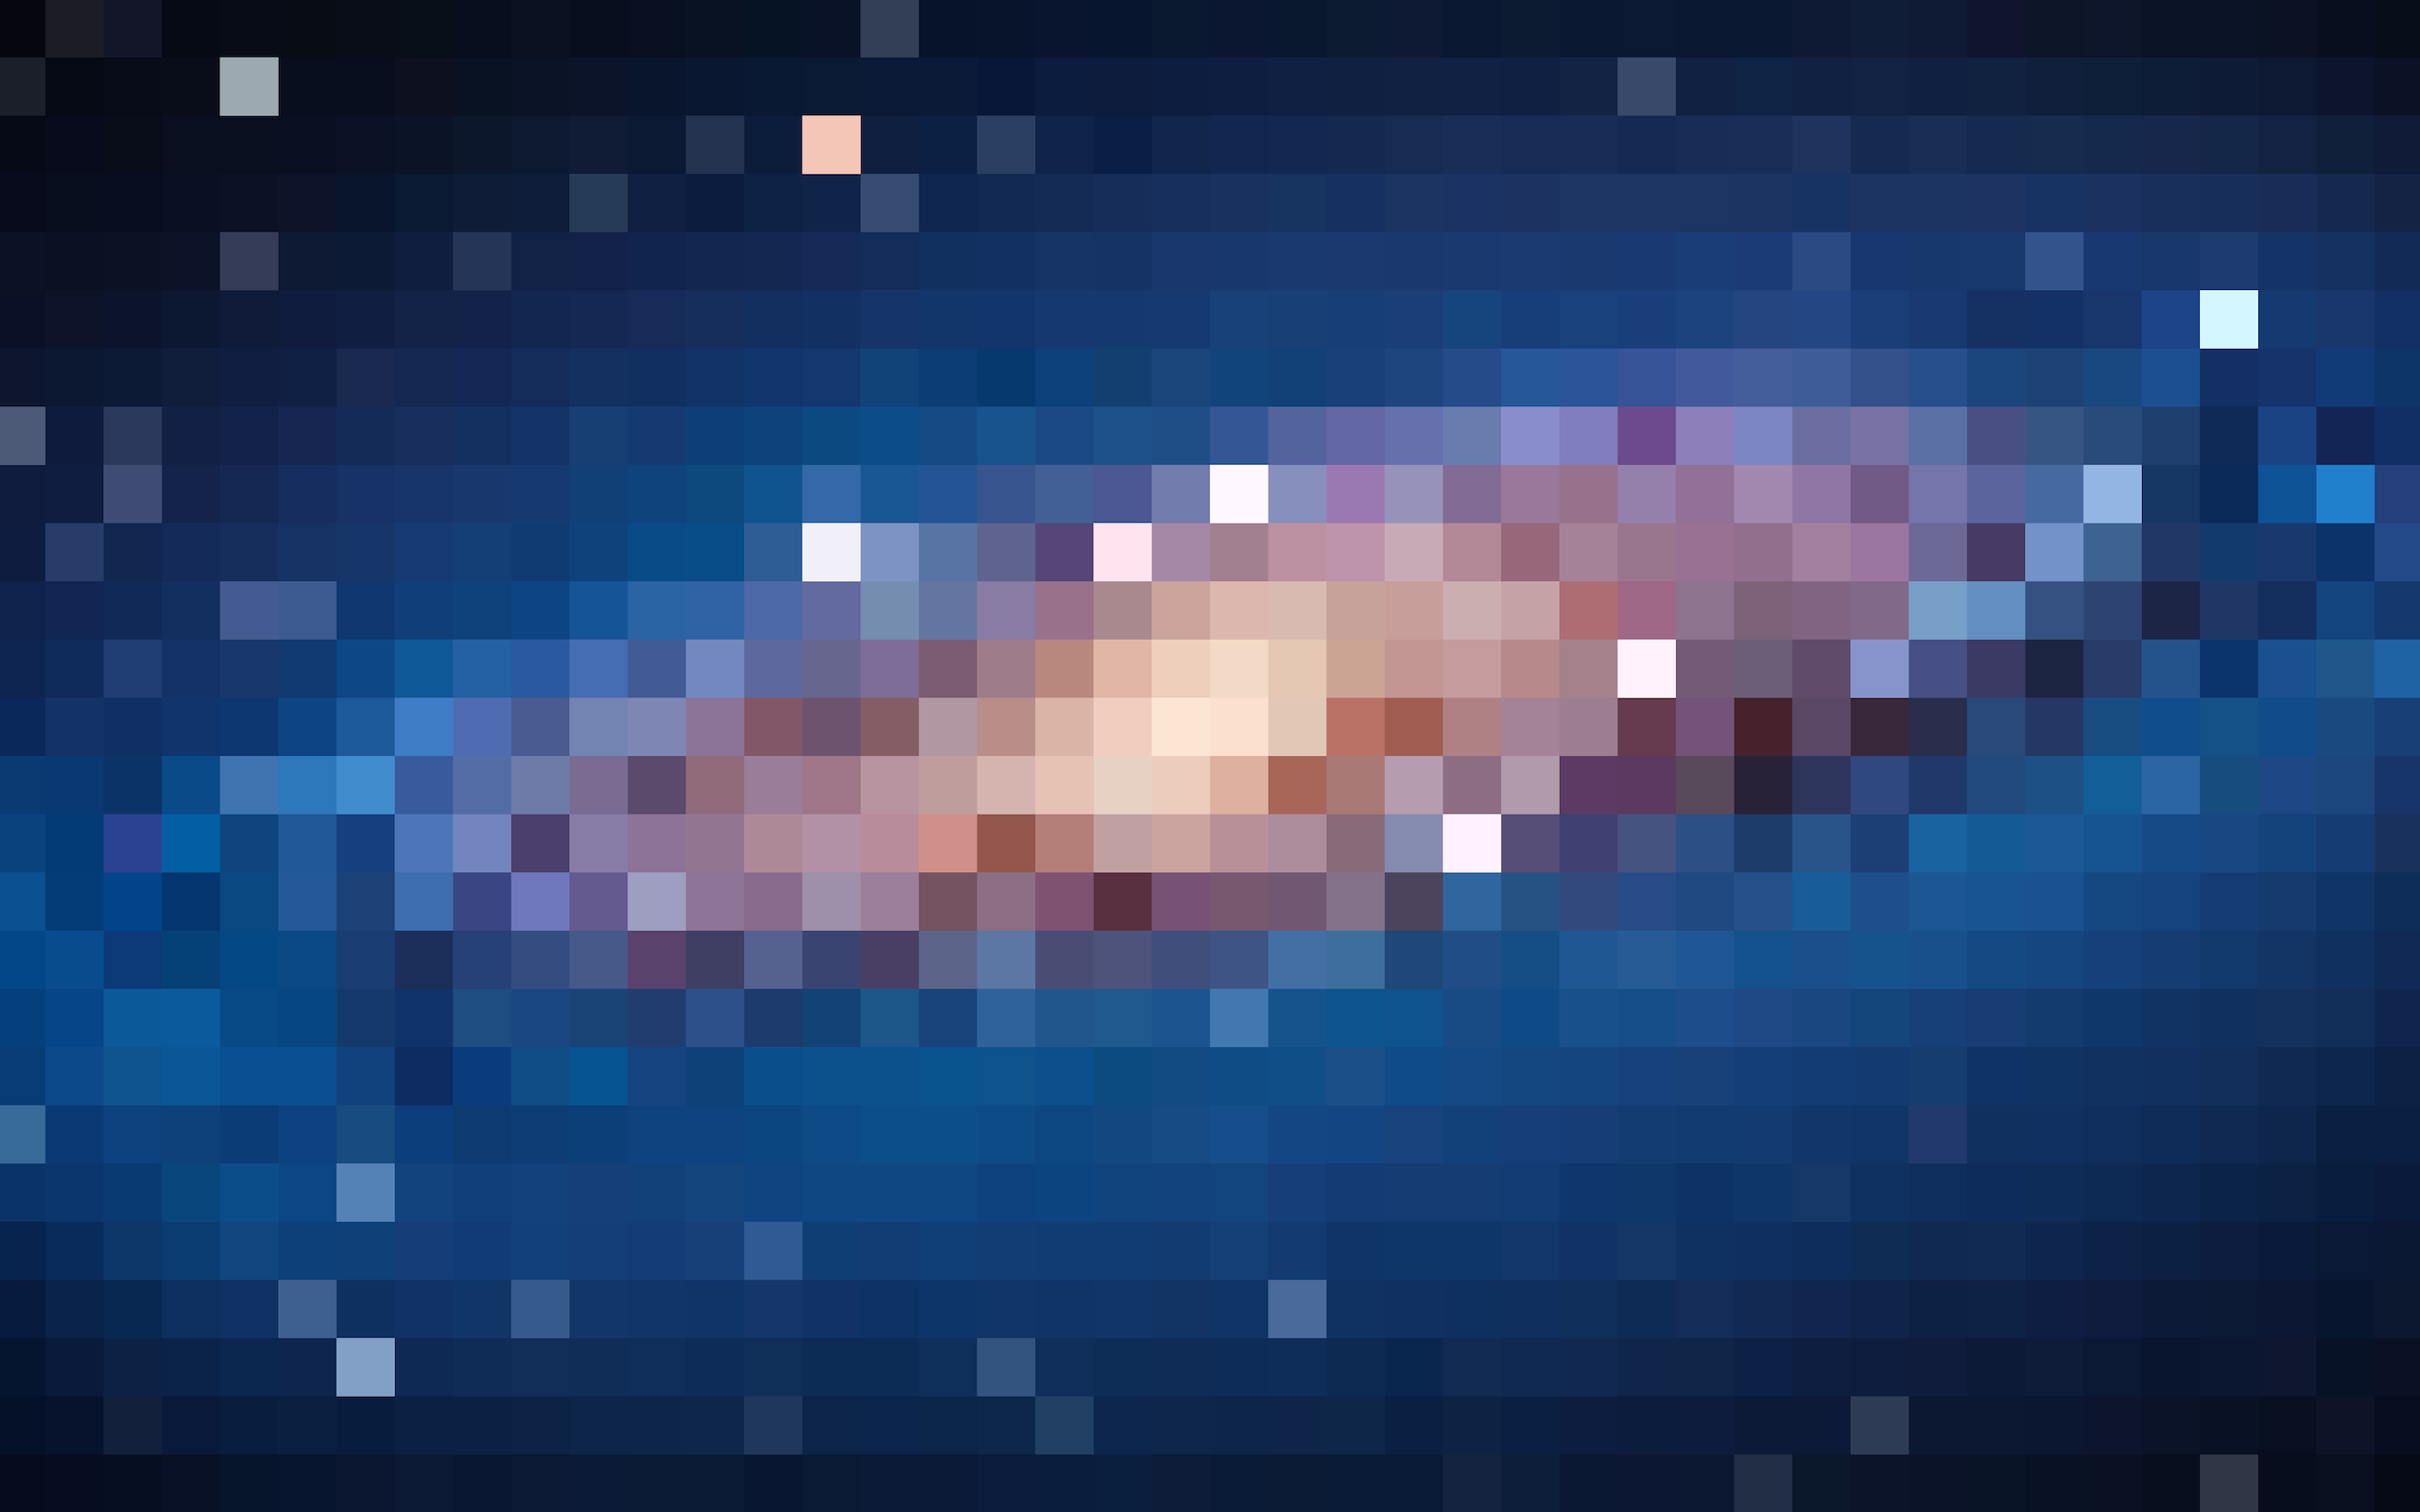 Andromeda Galaxy Wallpaper Mac Pics About Space HD Wallpapers Download Free Images Wallpaper [wallpaper981.blogspot.com]